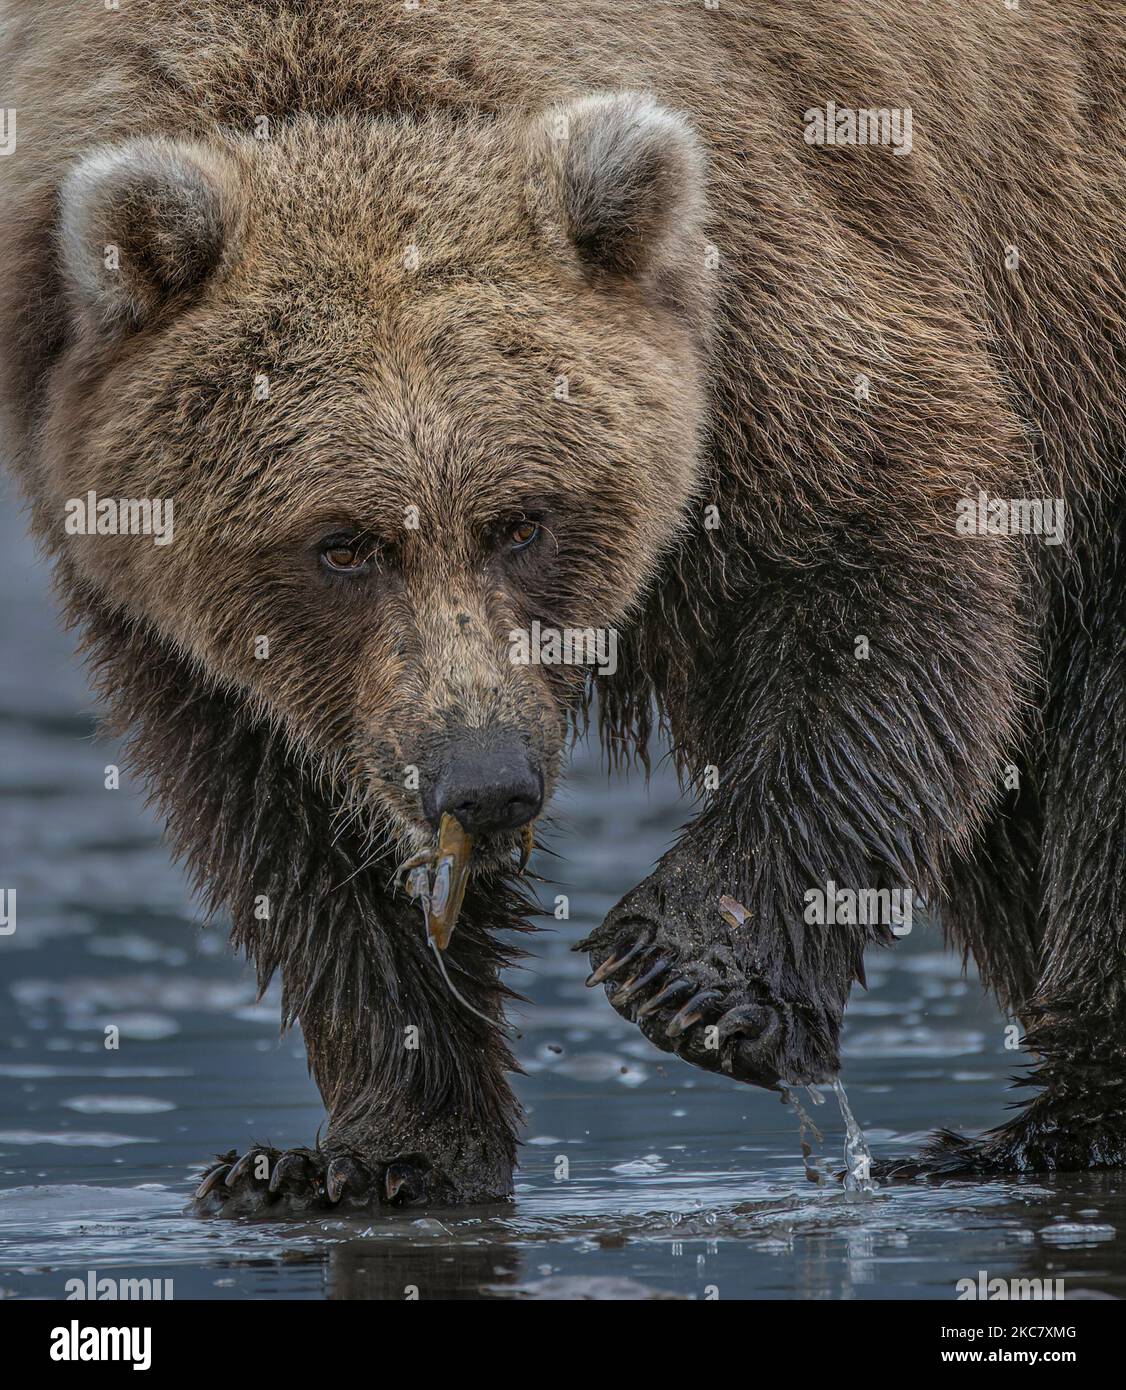 A wild Alaska Peninsula brown bear eating a razor clam in the water in daylight Stock Photo